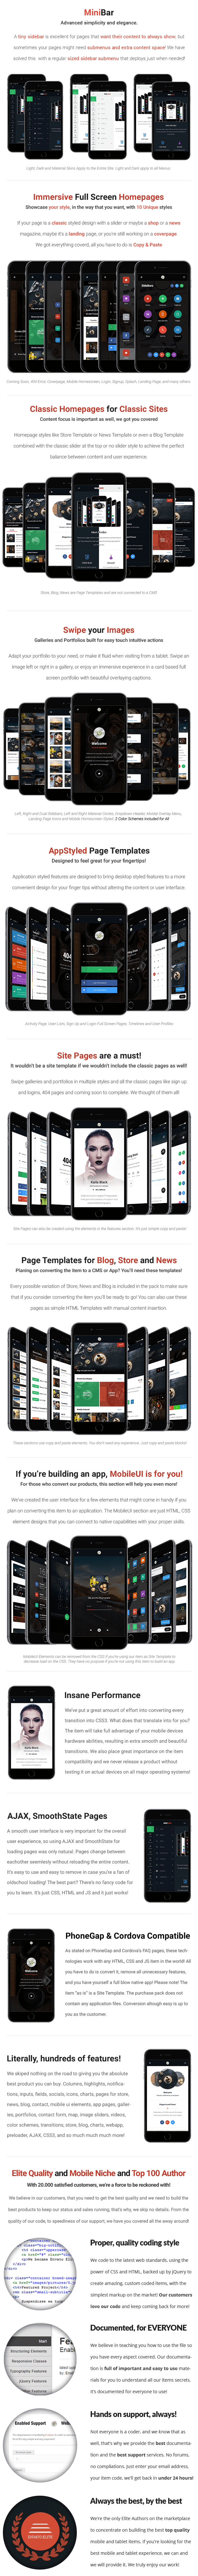 MiniBar | PhoneGap & Cordova Mobile App - 10